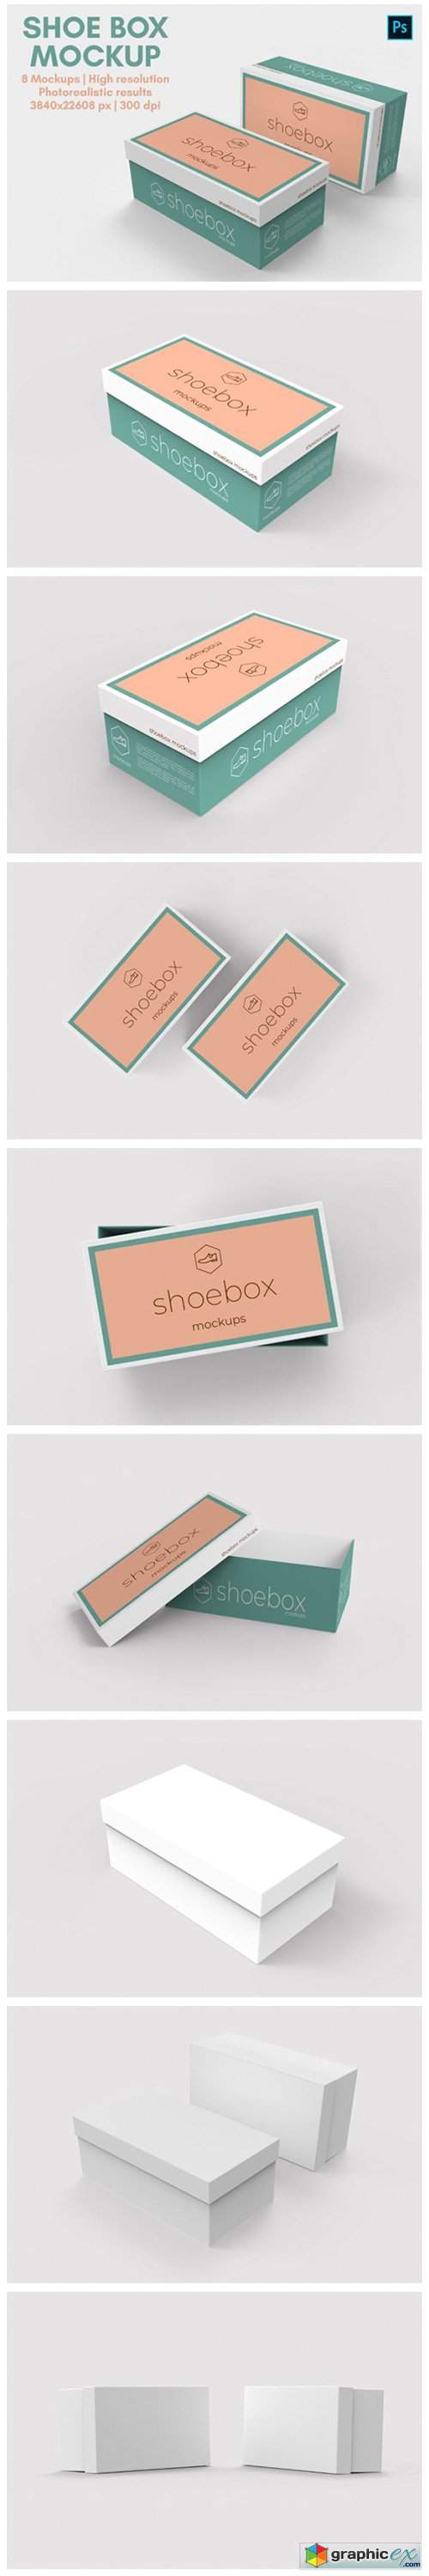 Shoe Box Mockup - 8 Views